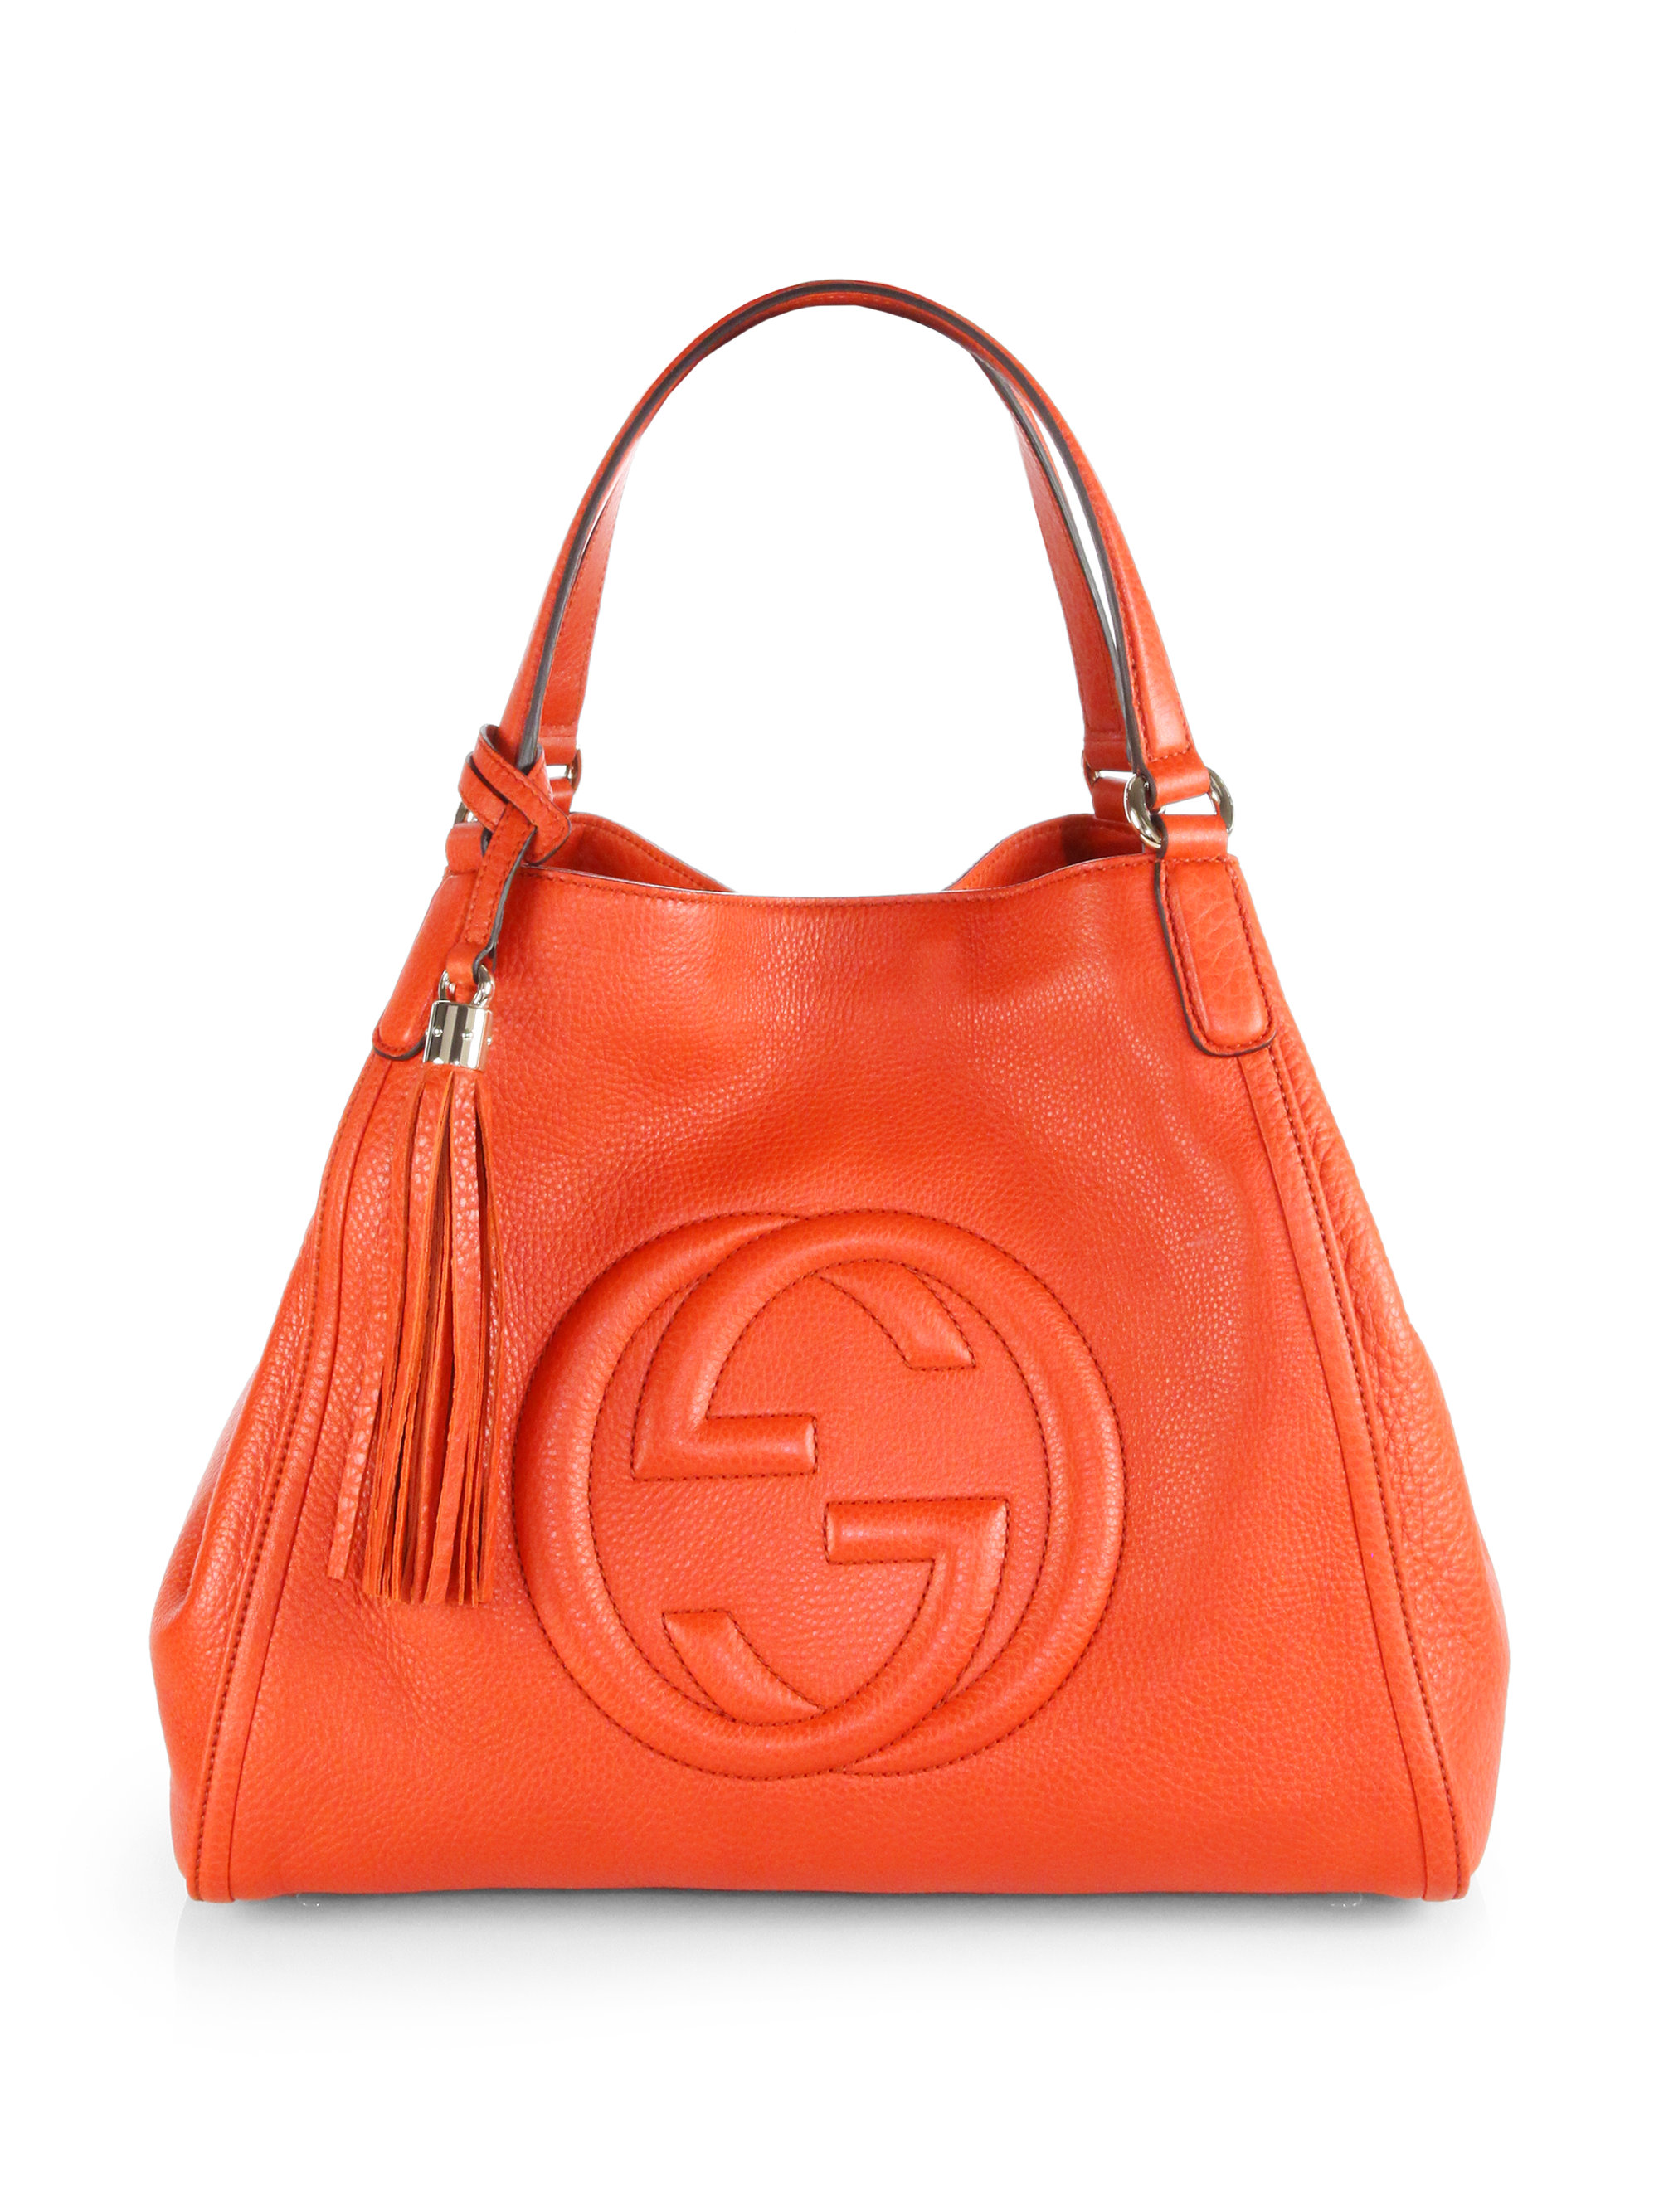 Gucci Soho Medium Shoulder Bag in 